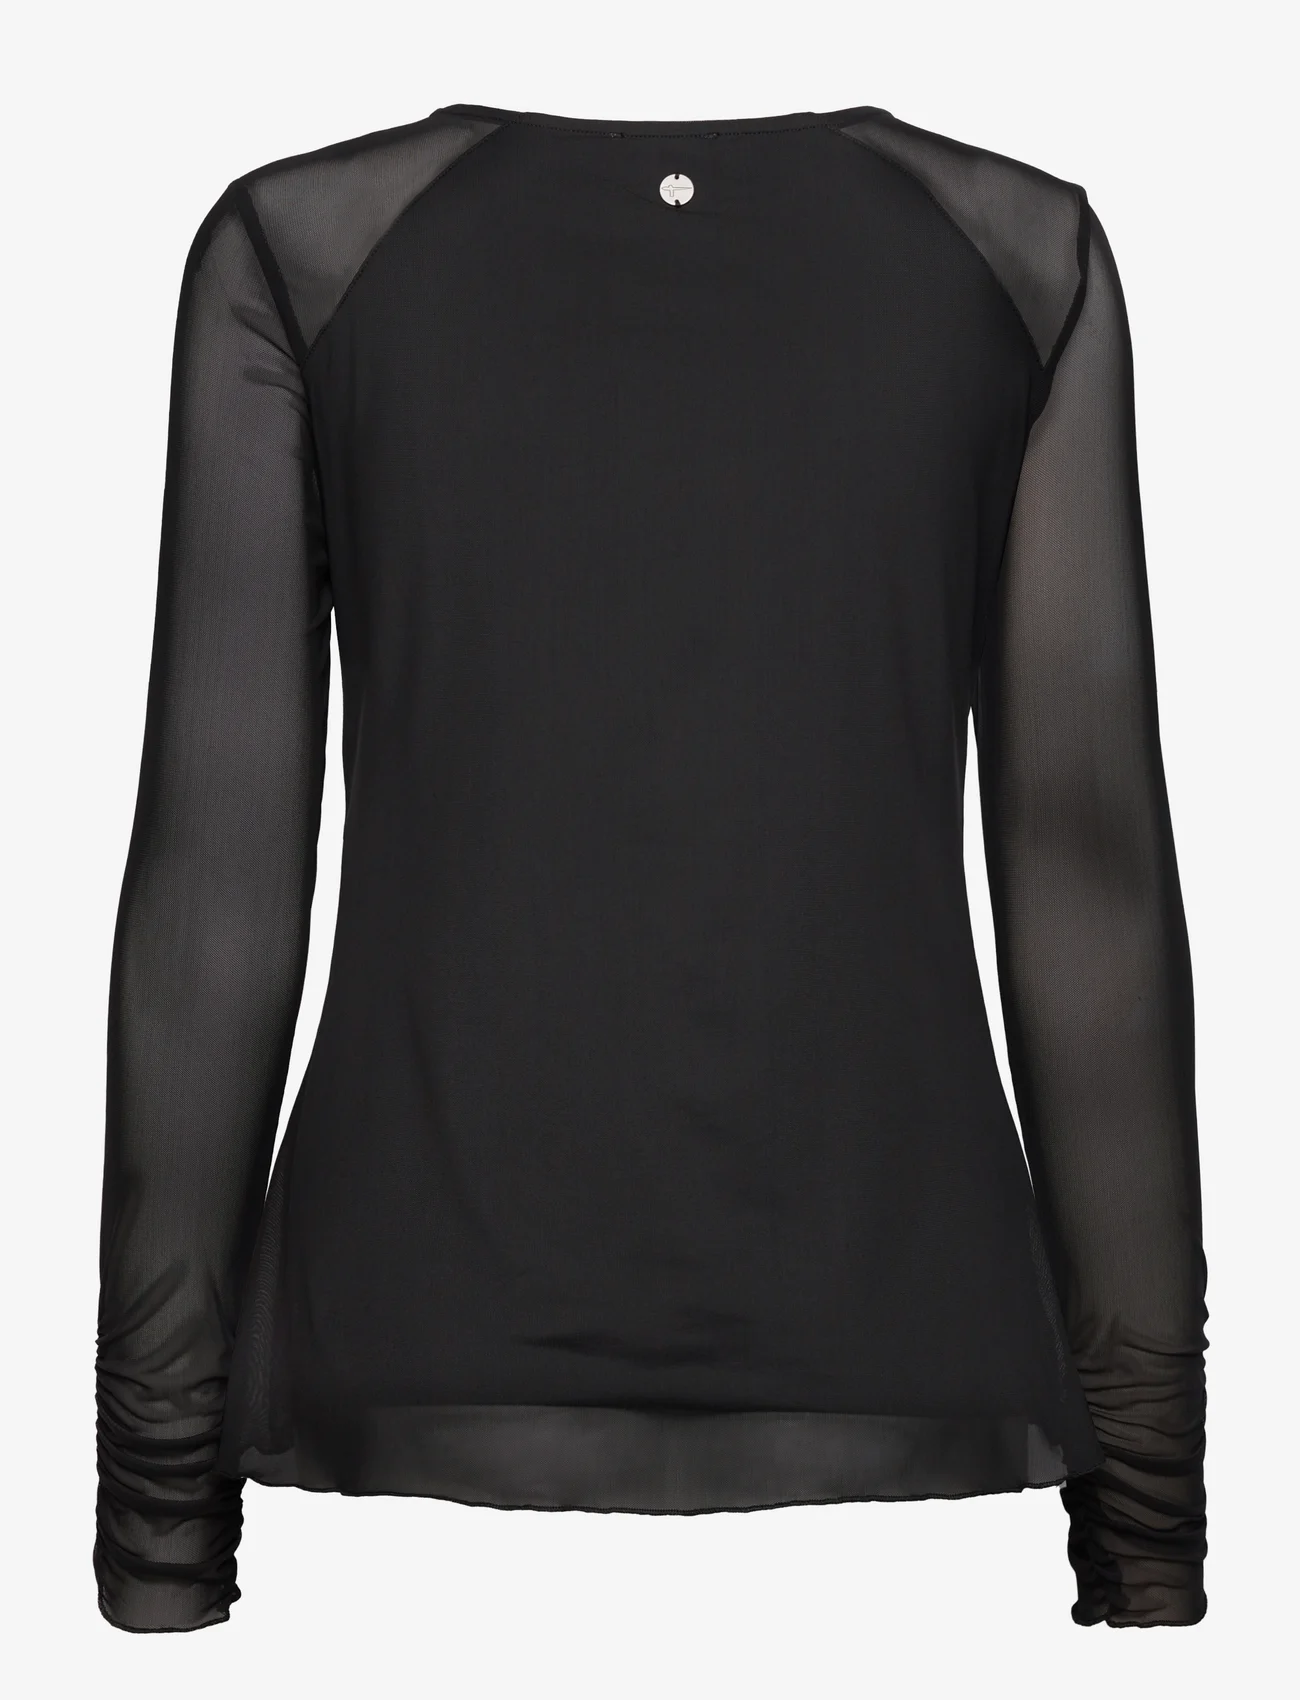 Tamaris Apparel - CAGE Long sleeve Mesh Shirt - pitkähihaiset t-paidat - black beauty - 1